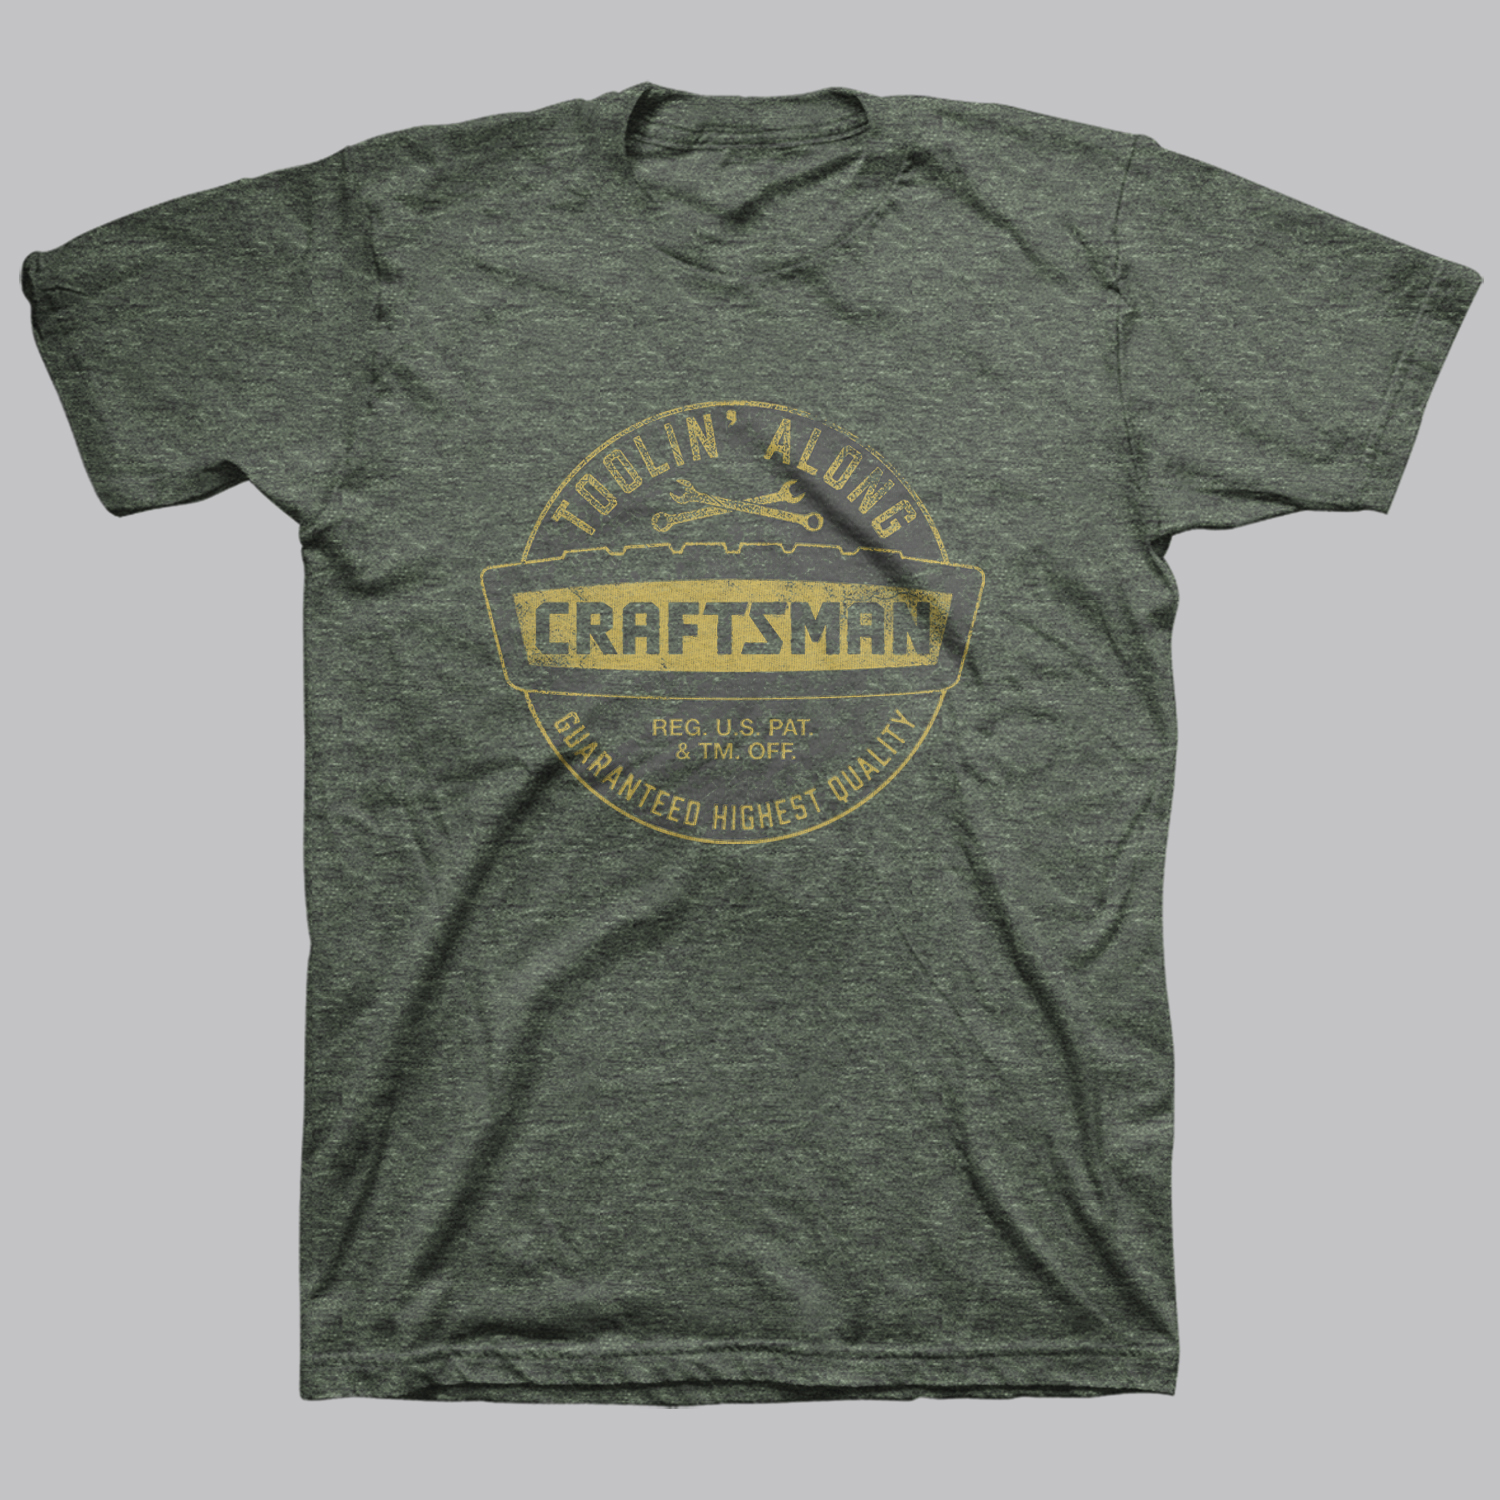 Craftsman Men's Graphic T-Shirt - Toolin' Along